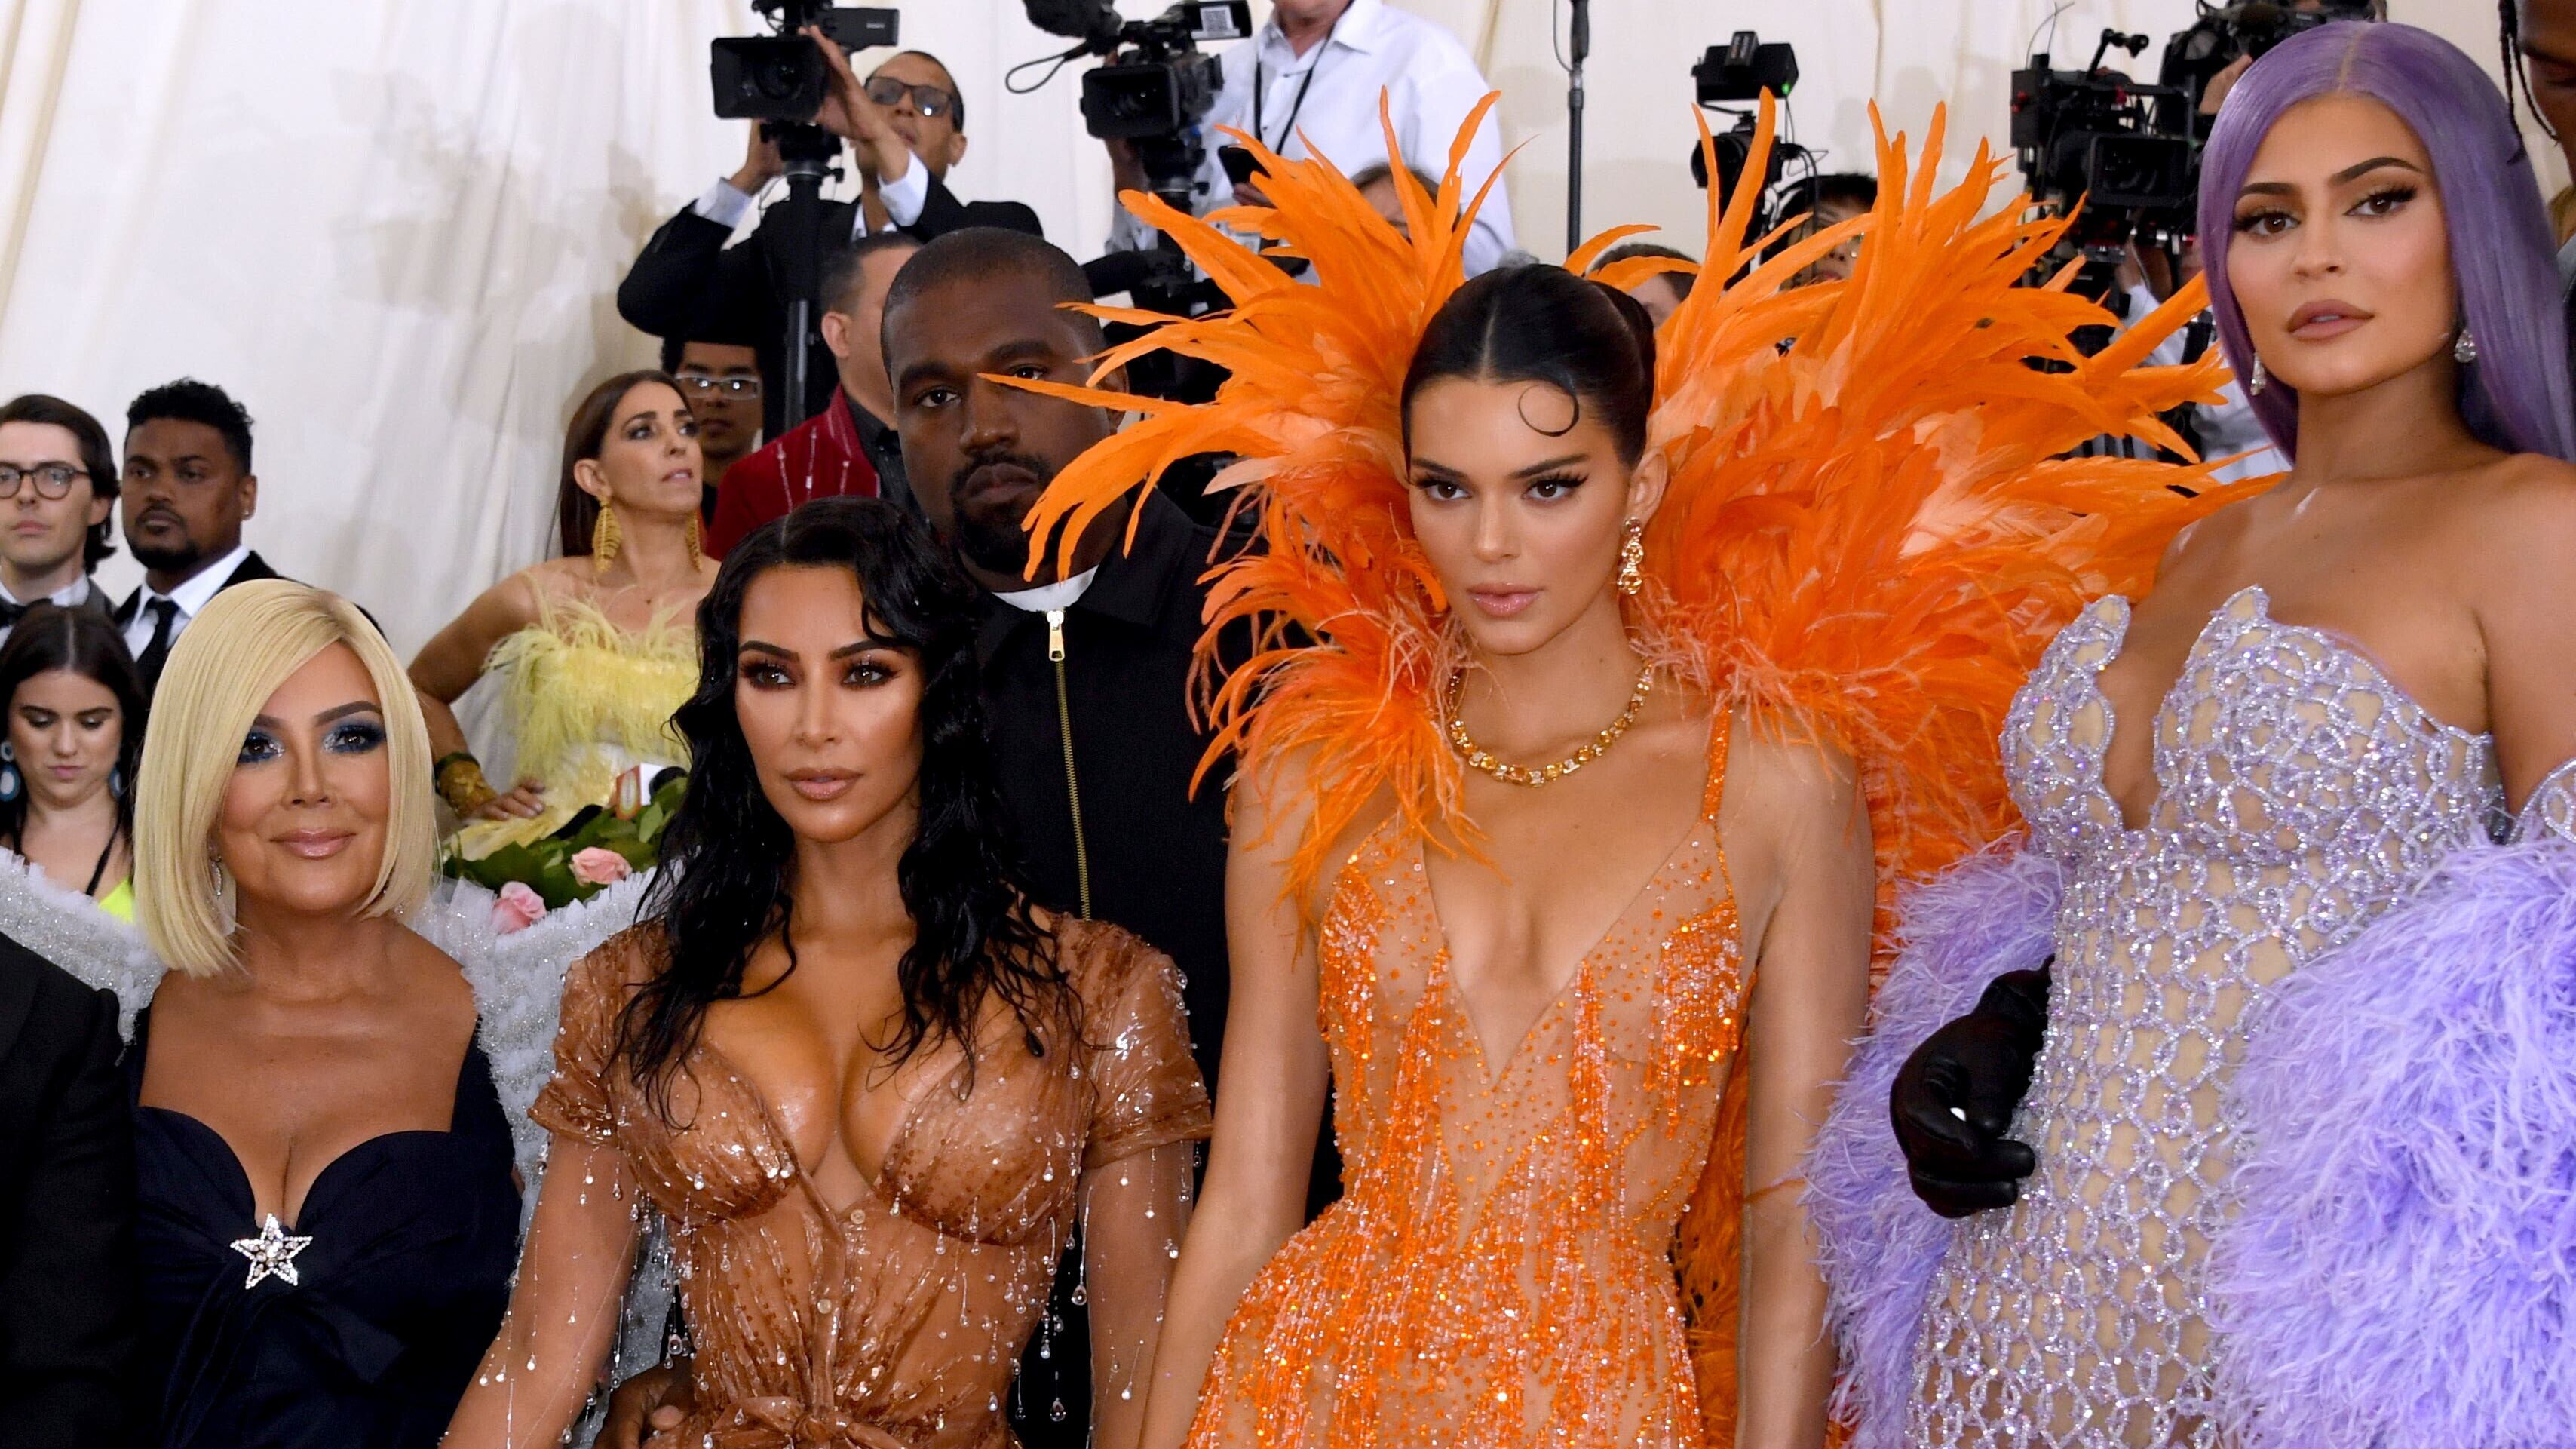 Kris Jenner, Kim Kardashian, Kendall Jenner, Kylie Jenner attending the Metropolitan Museum of Art Costume Institute Benefit Gala (Jennifer Graylock/PA)